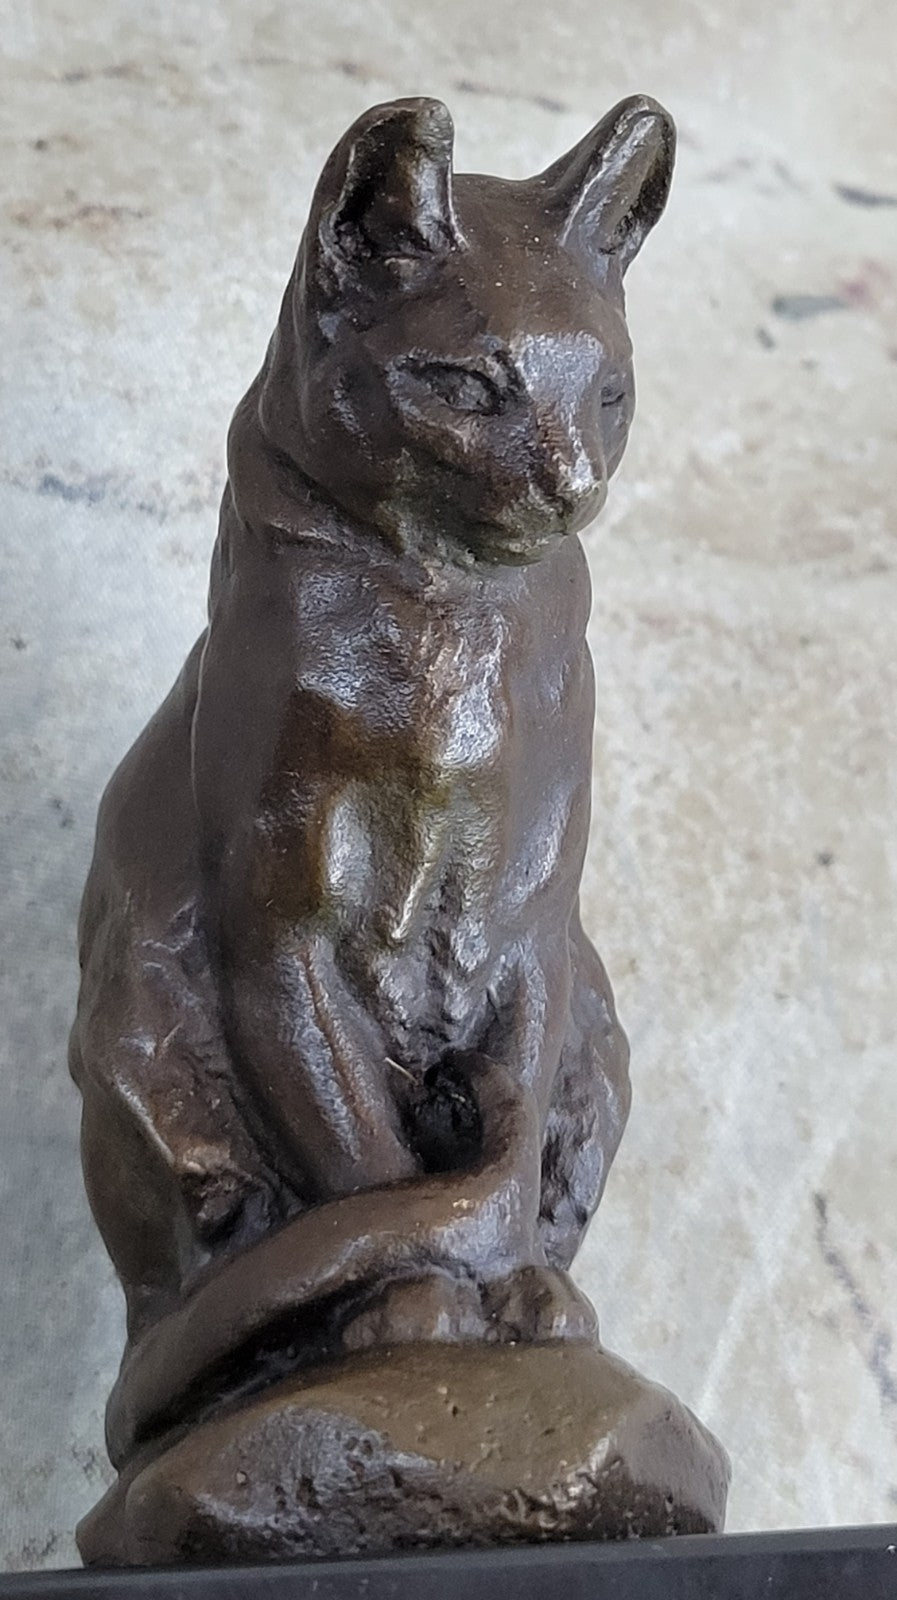 Handcrafted bronze sculpture SALE Decor Home Cast Hot Cat House Original Signed